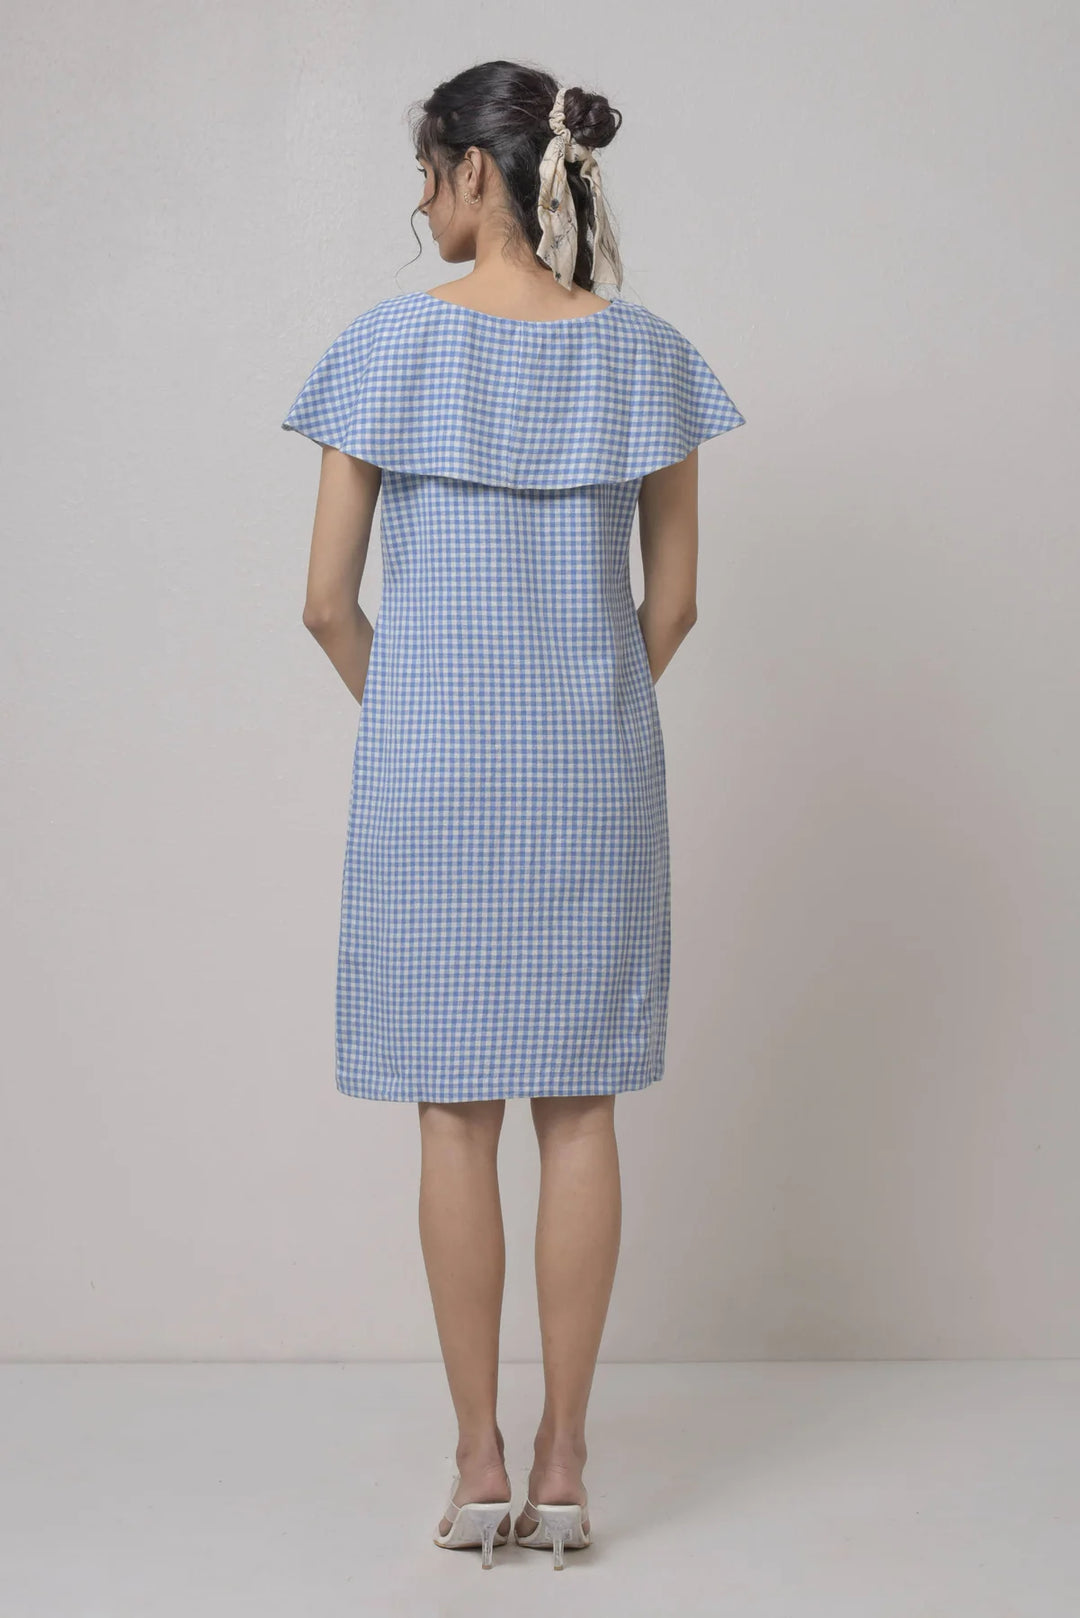 Handwoven Cotton Dress: Blue & White, Sleeveless, Vintage Charm | Mia Handwoven Cotton Dress - Blue